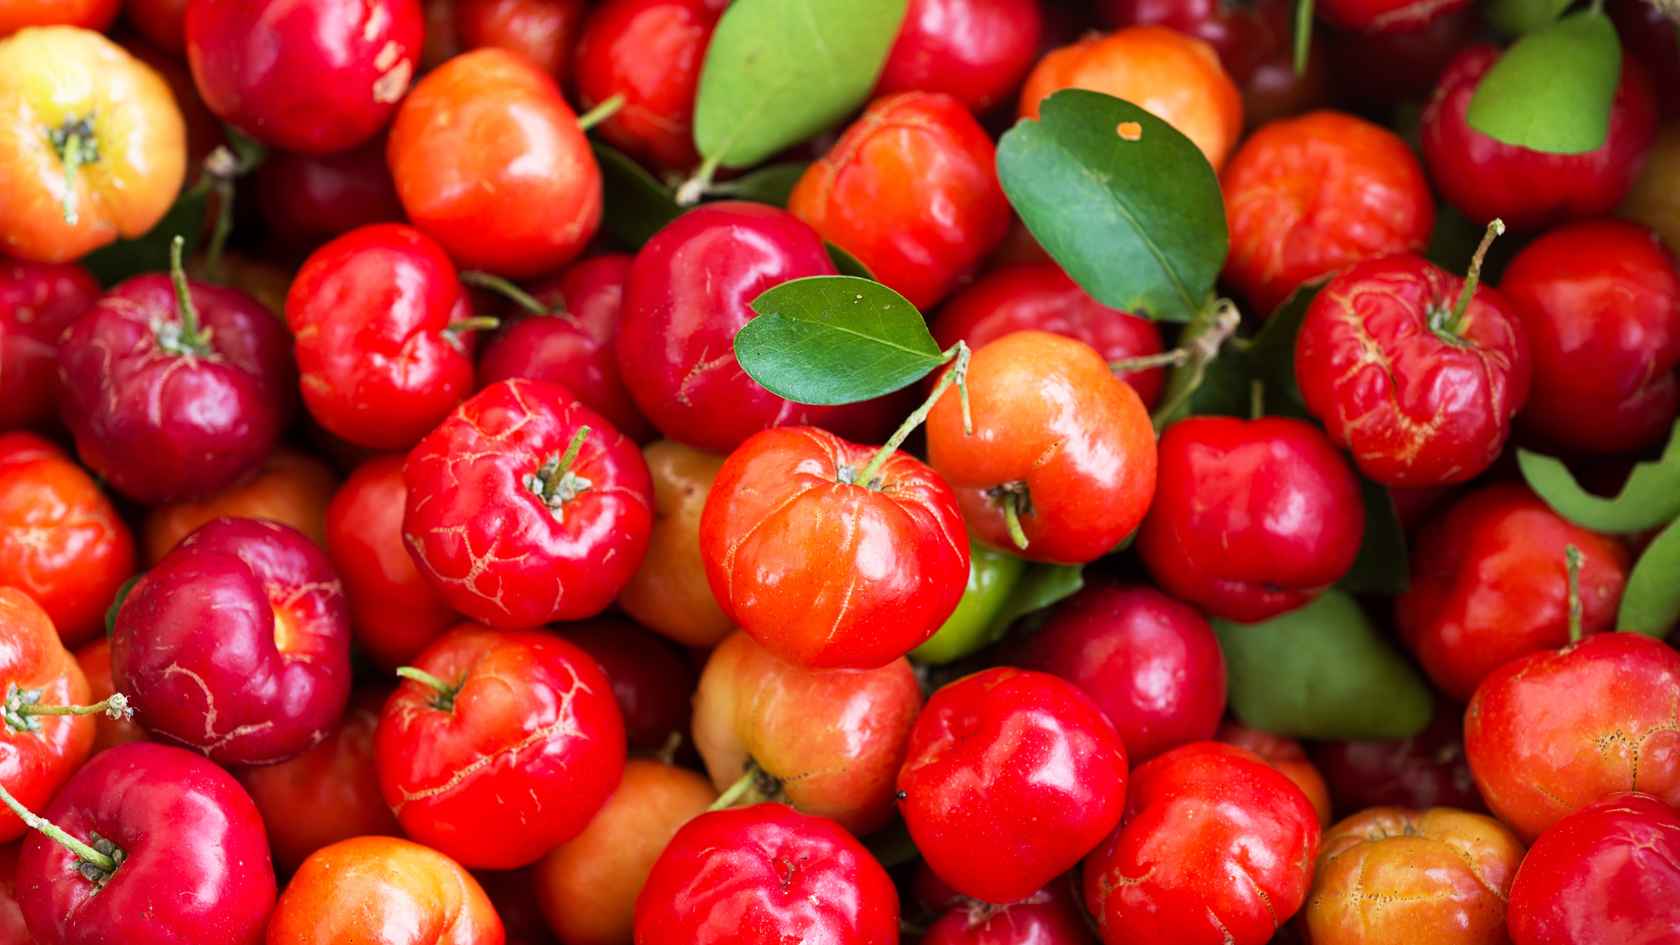 Resist Bars Ingredient antioxidant Acerola Cherry for hormone health